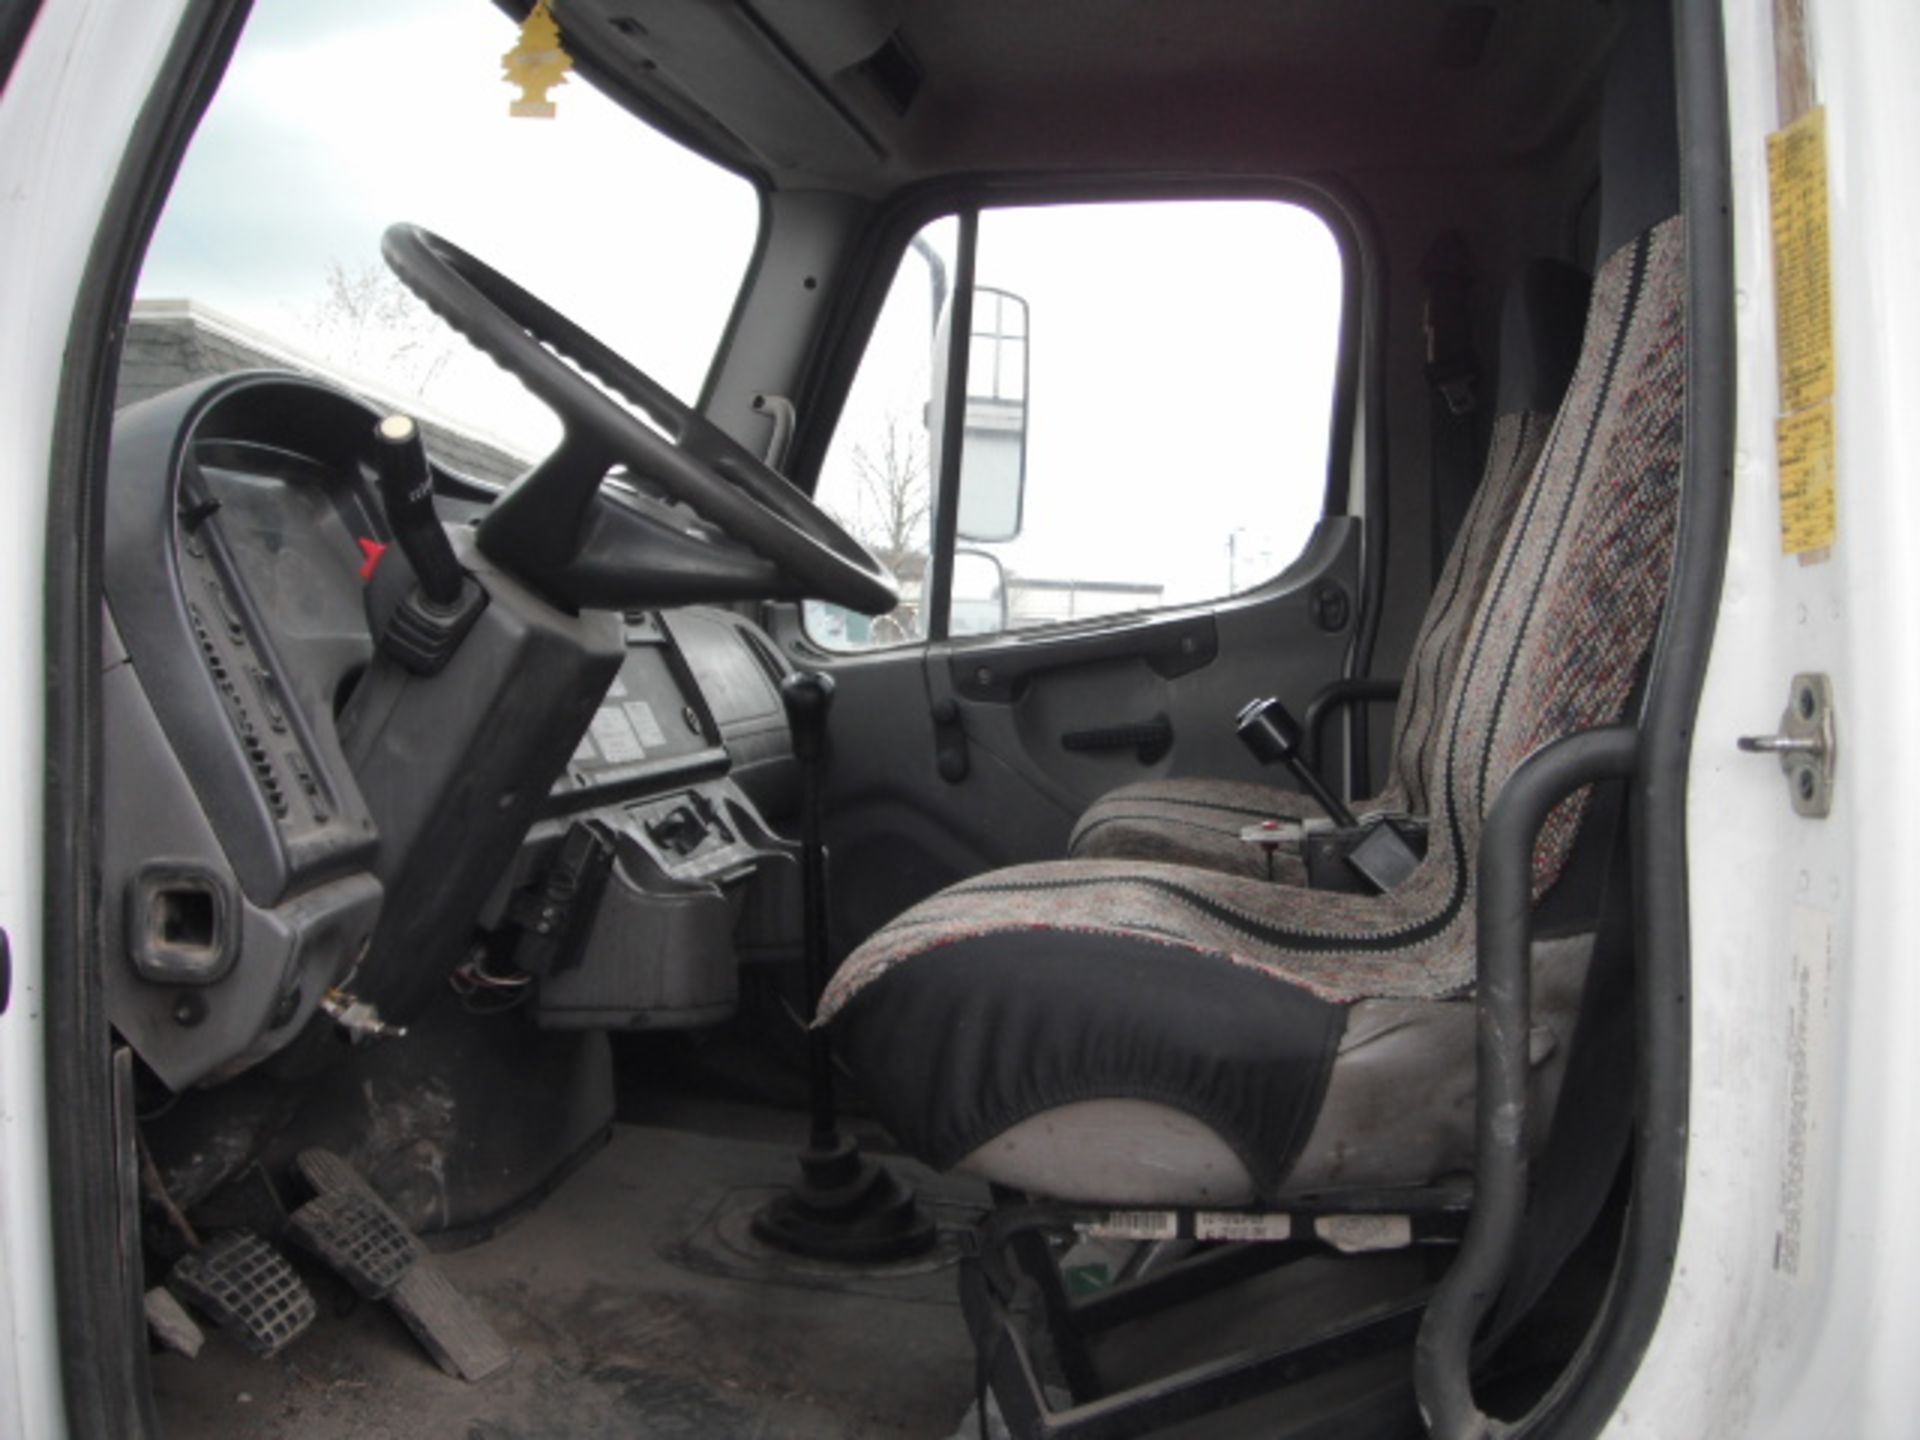 2005 Freightliner M2 Dump Truck (43082) - Image 4 of 6